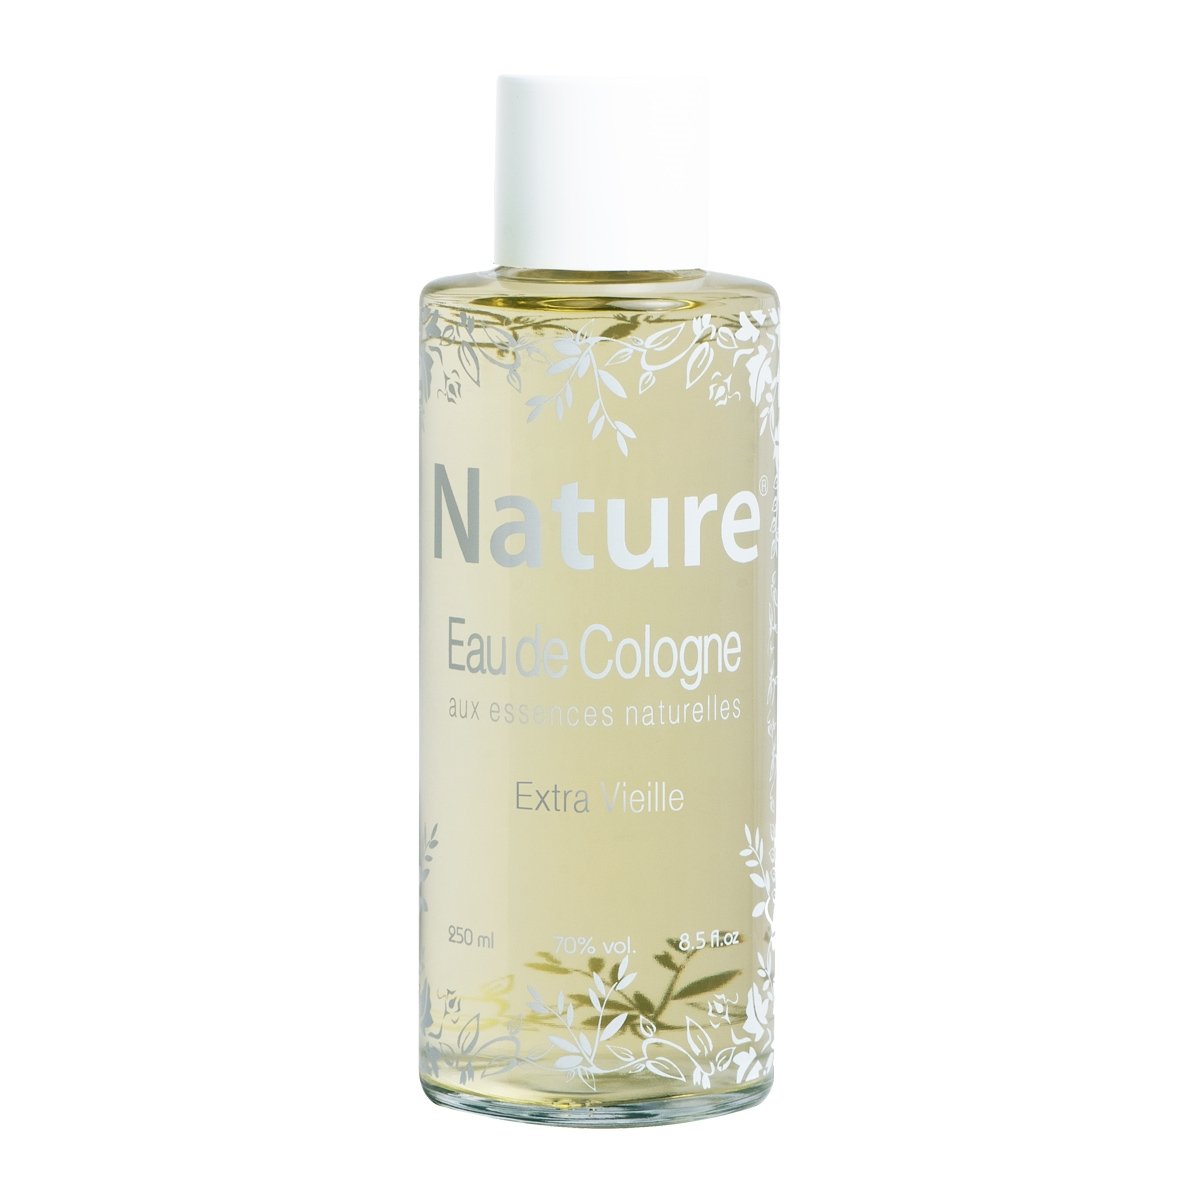 Perfume Cadentia Nature Fraicheur Extra Vieille - Eau de Cologne 500ml 1